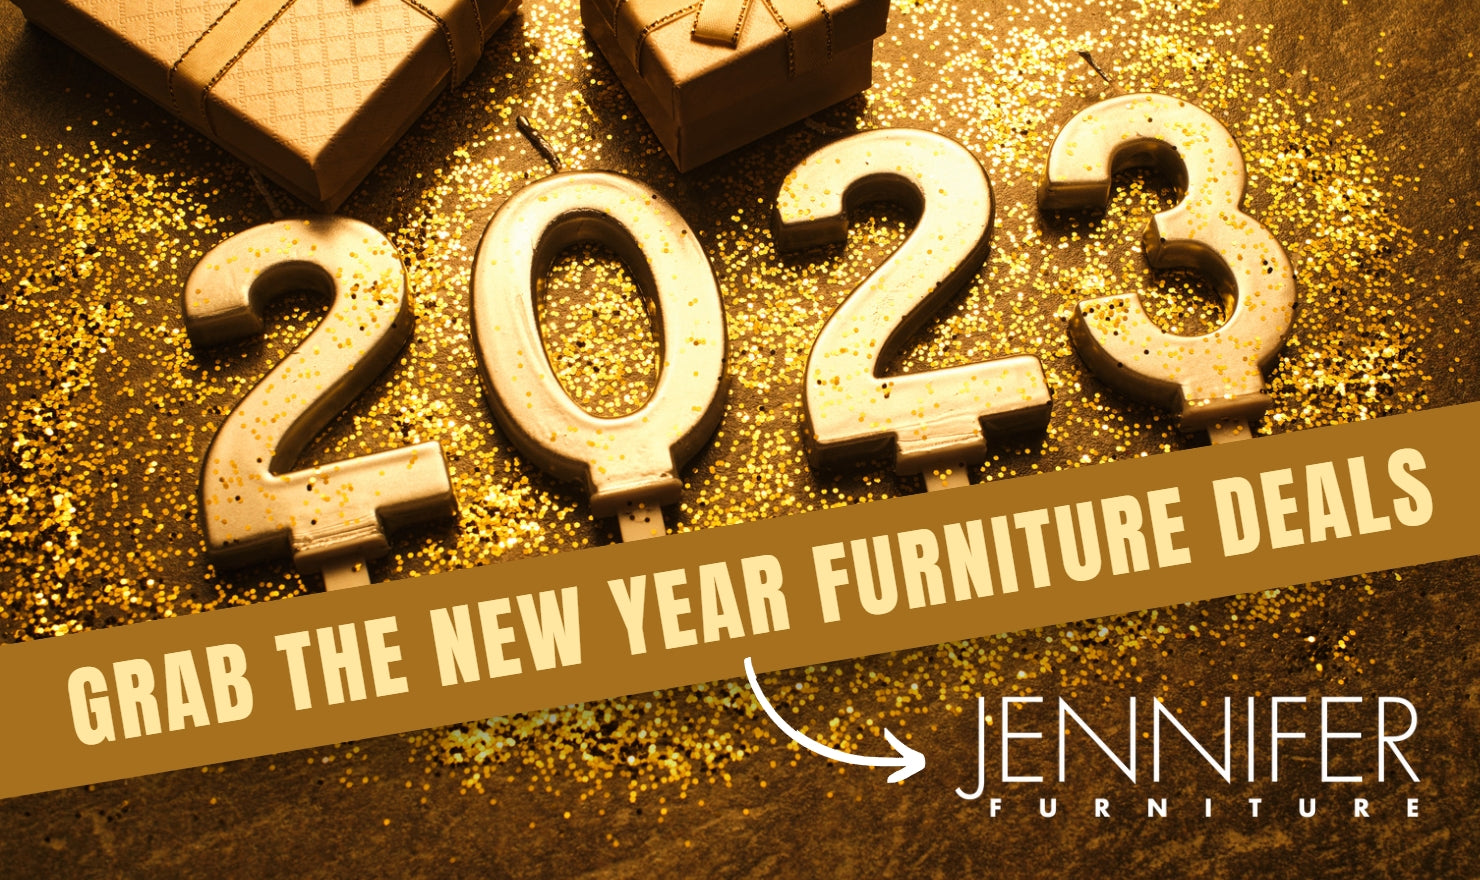 New Year Furniture Deals at Jennifer Furniture